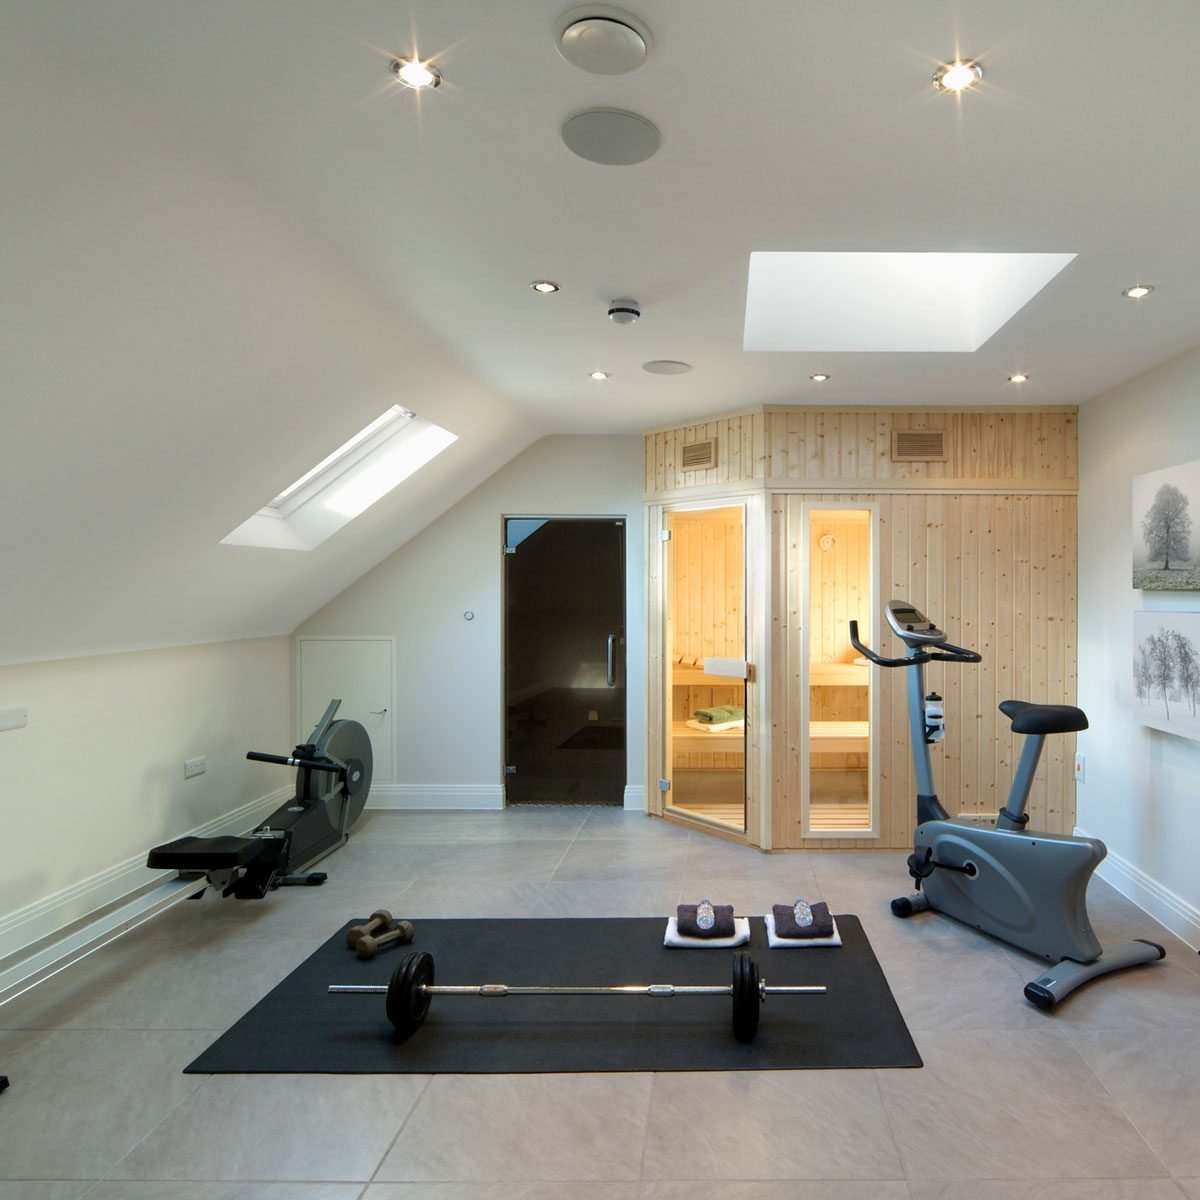 The 5 Best Home Gym Flooring Ideas, Exercise Equipment Mats Hardwood Floors